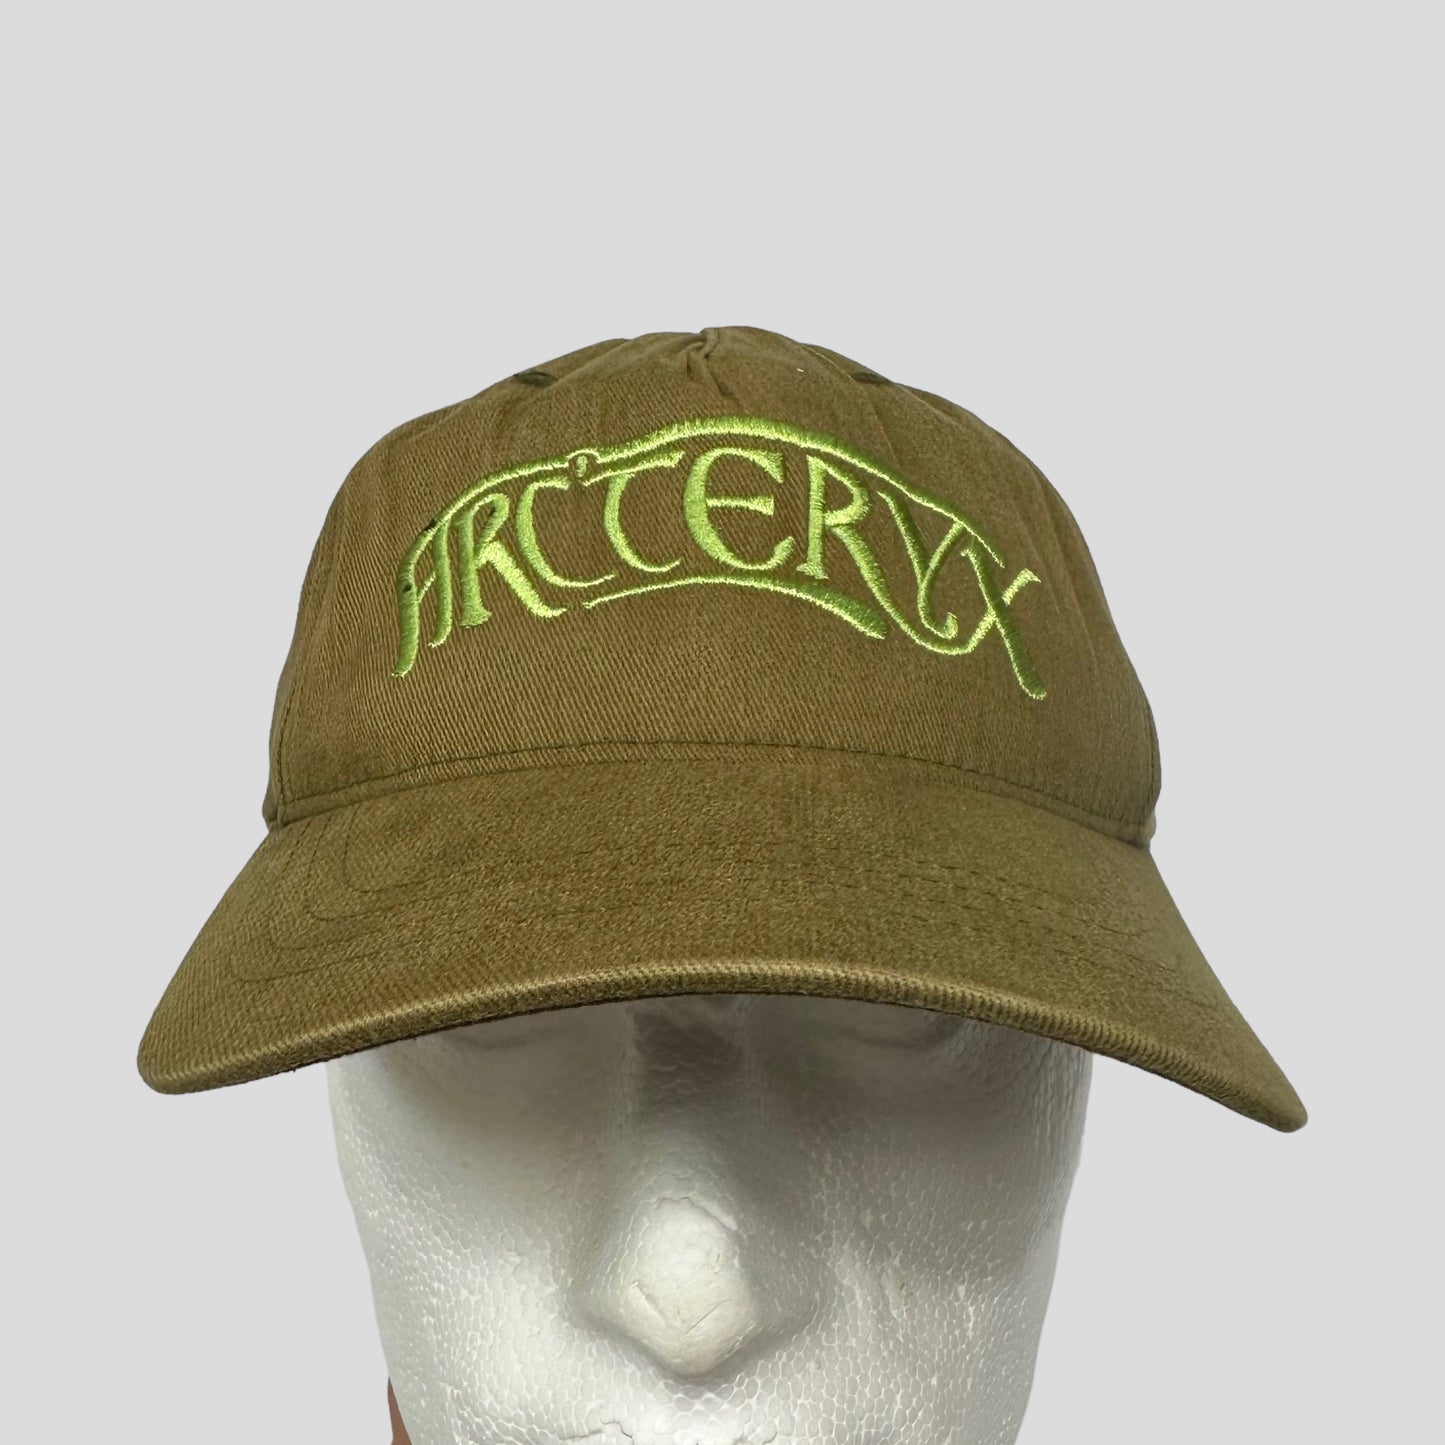 Arc’teryx 2014 Embroidered Baseball Cap - OS